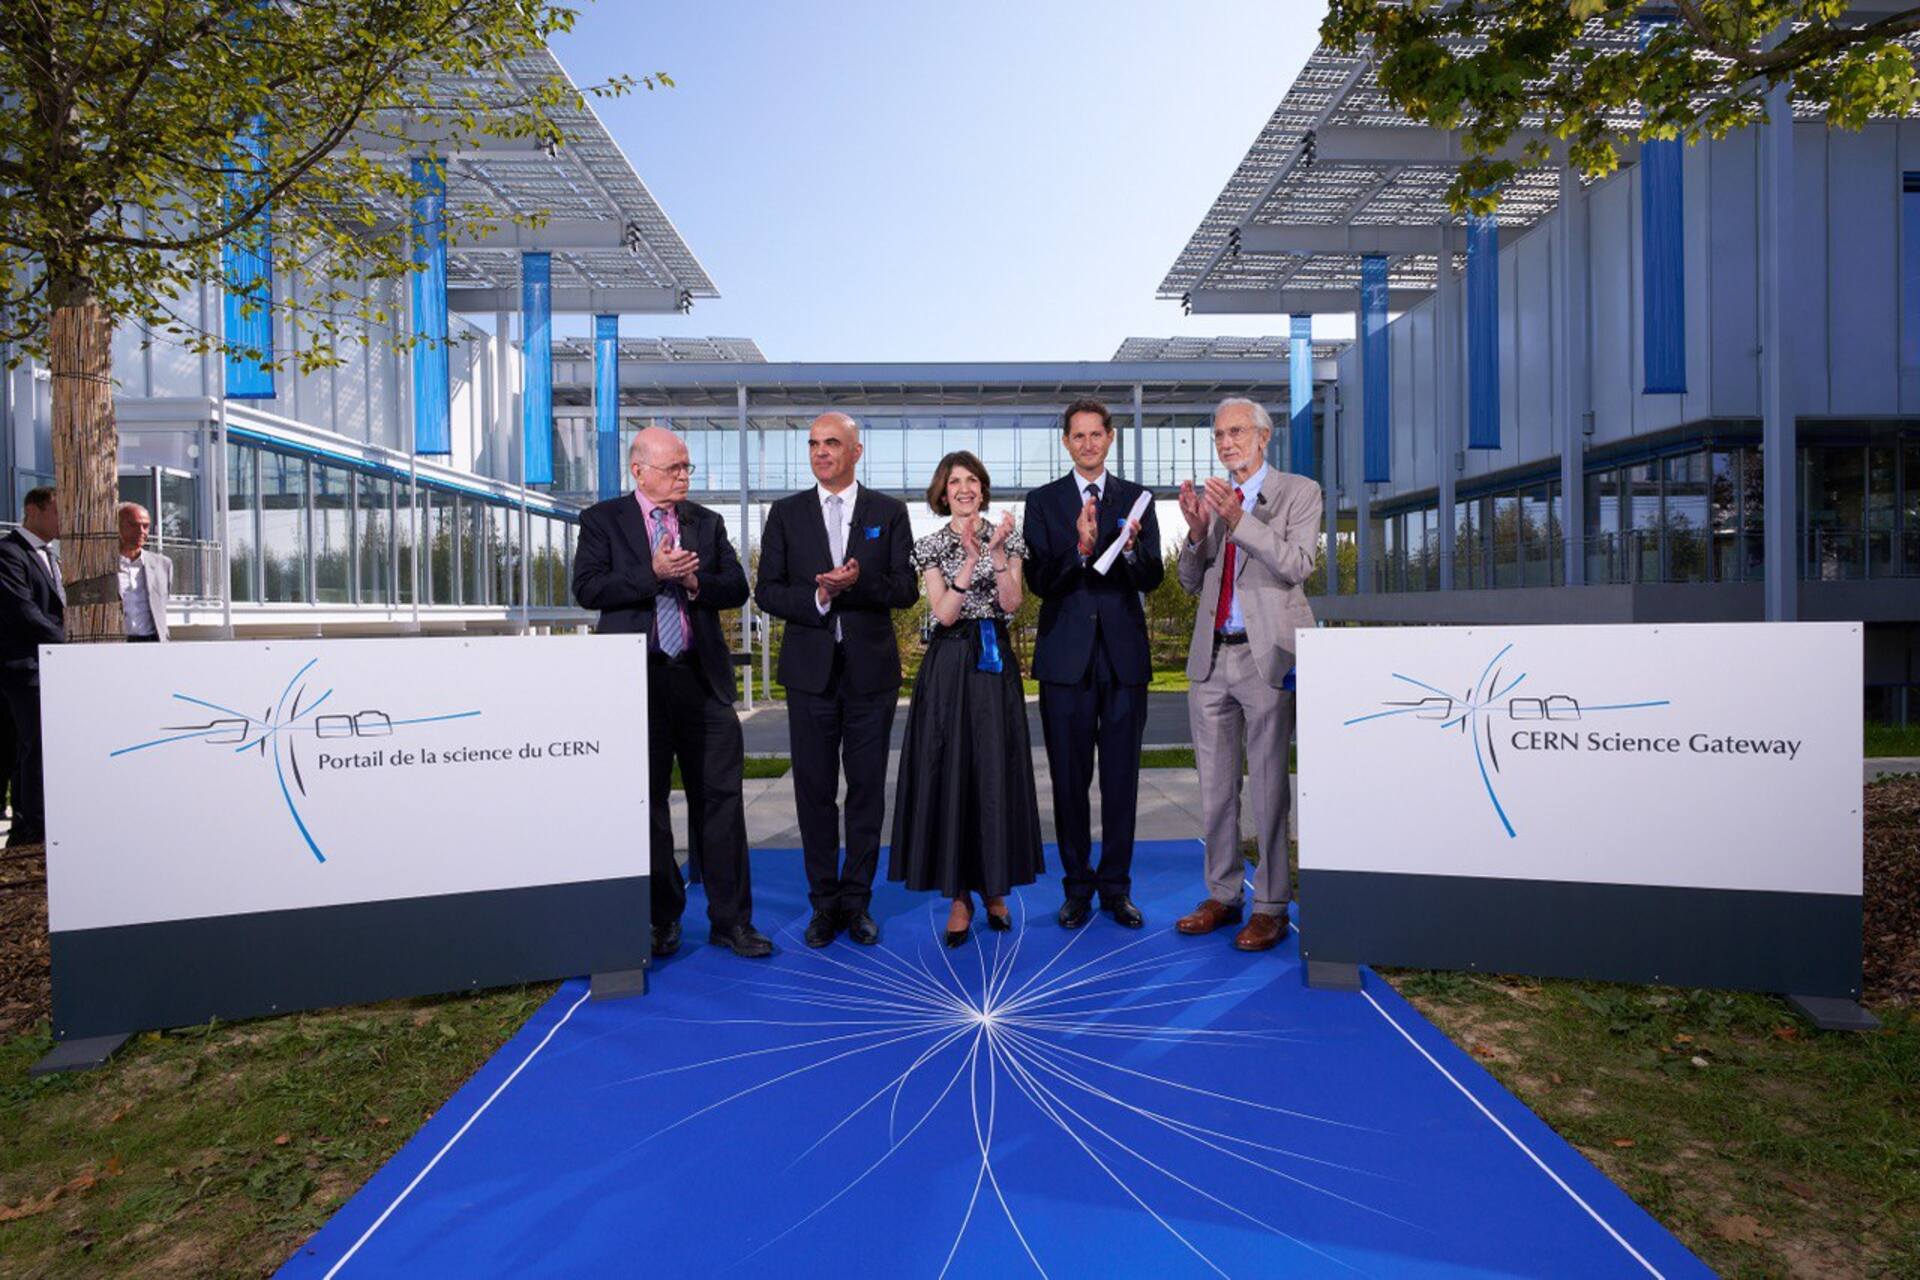 CERN Science Gateway: Eliezer Rabinovici, Alain Berset, Fabiola Gianotti, John Ekann und Renzo Piano